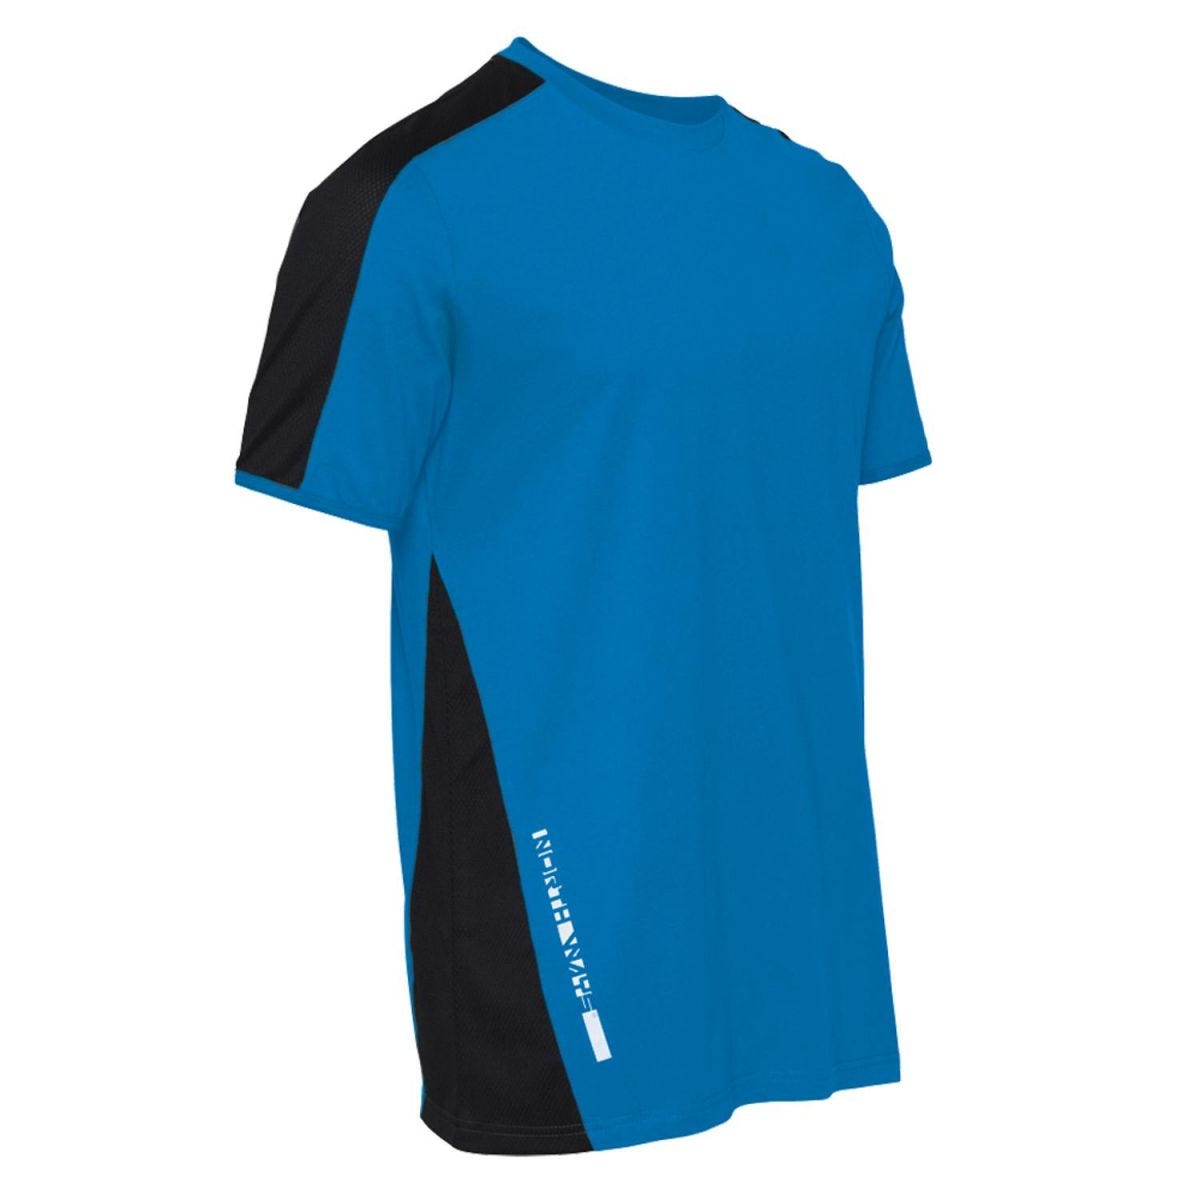 Tee-shirt à manches courtes pour homme Andy bleu - North Ways - Taille 3XL 2